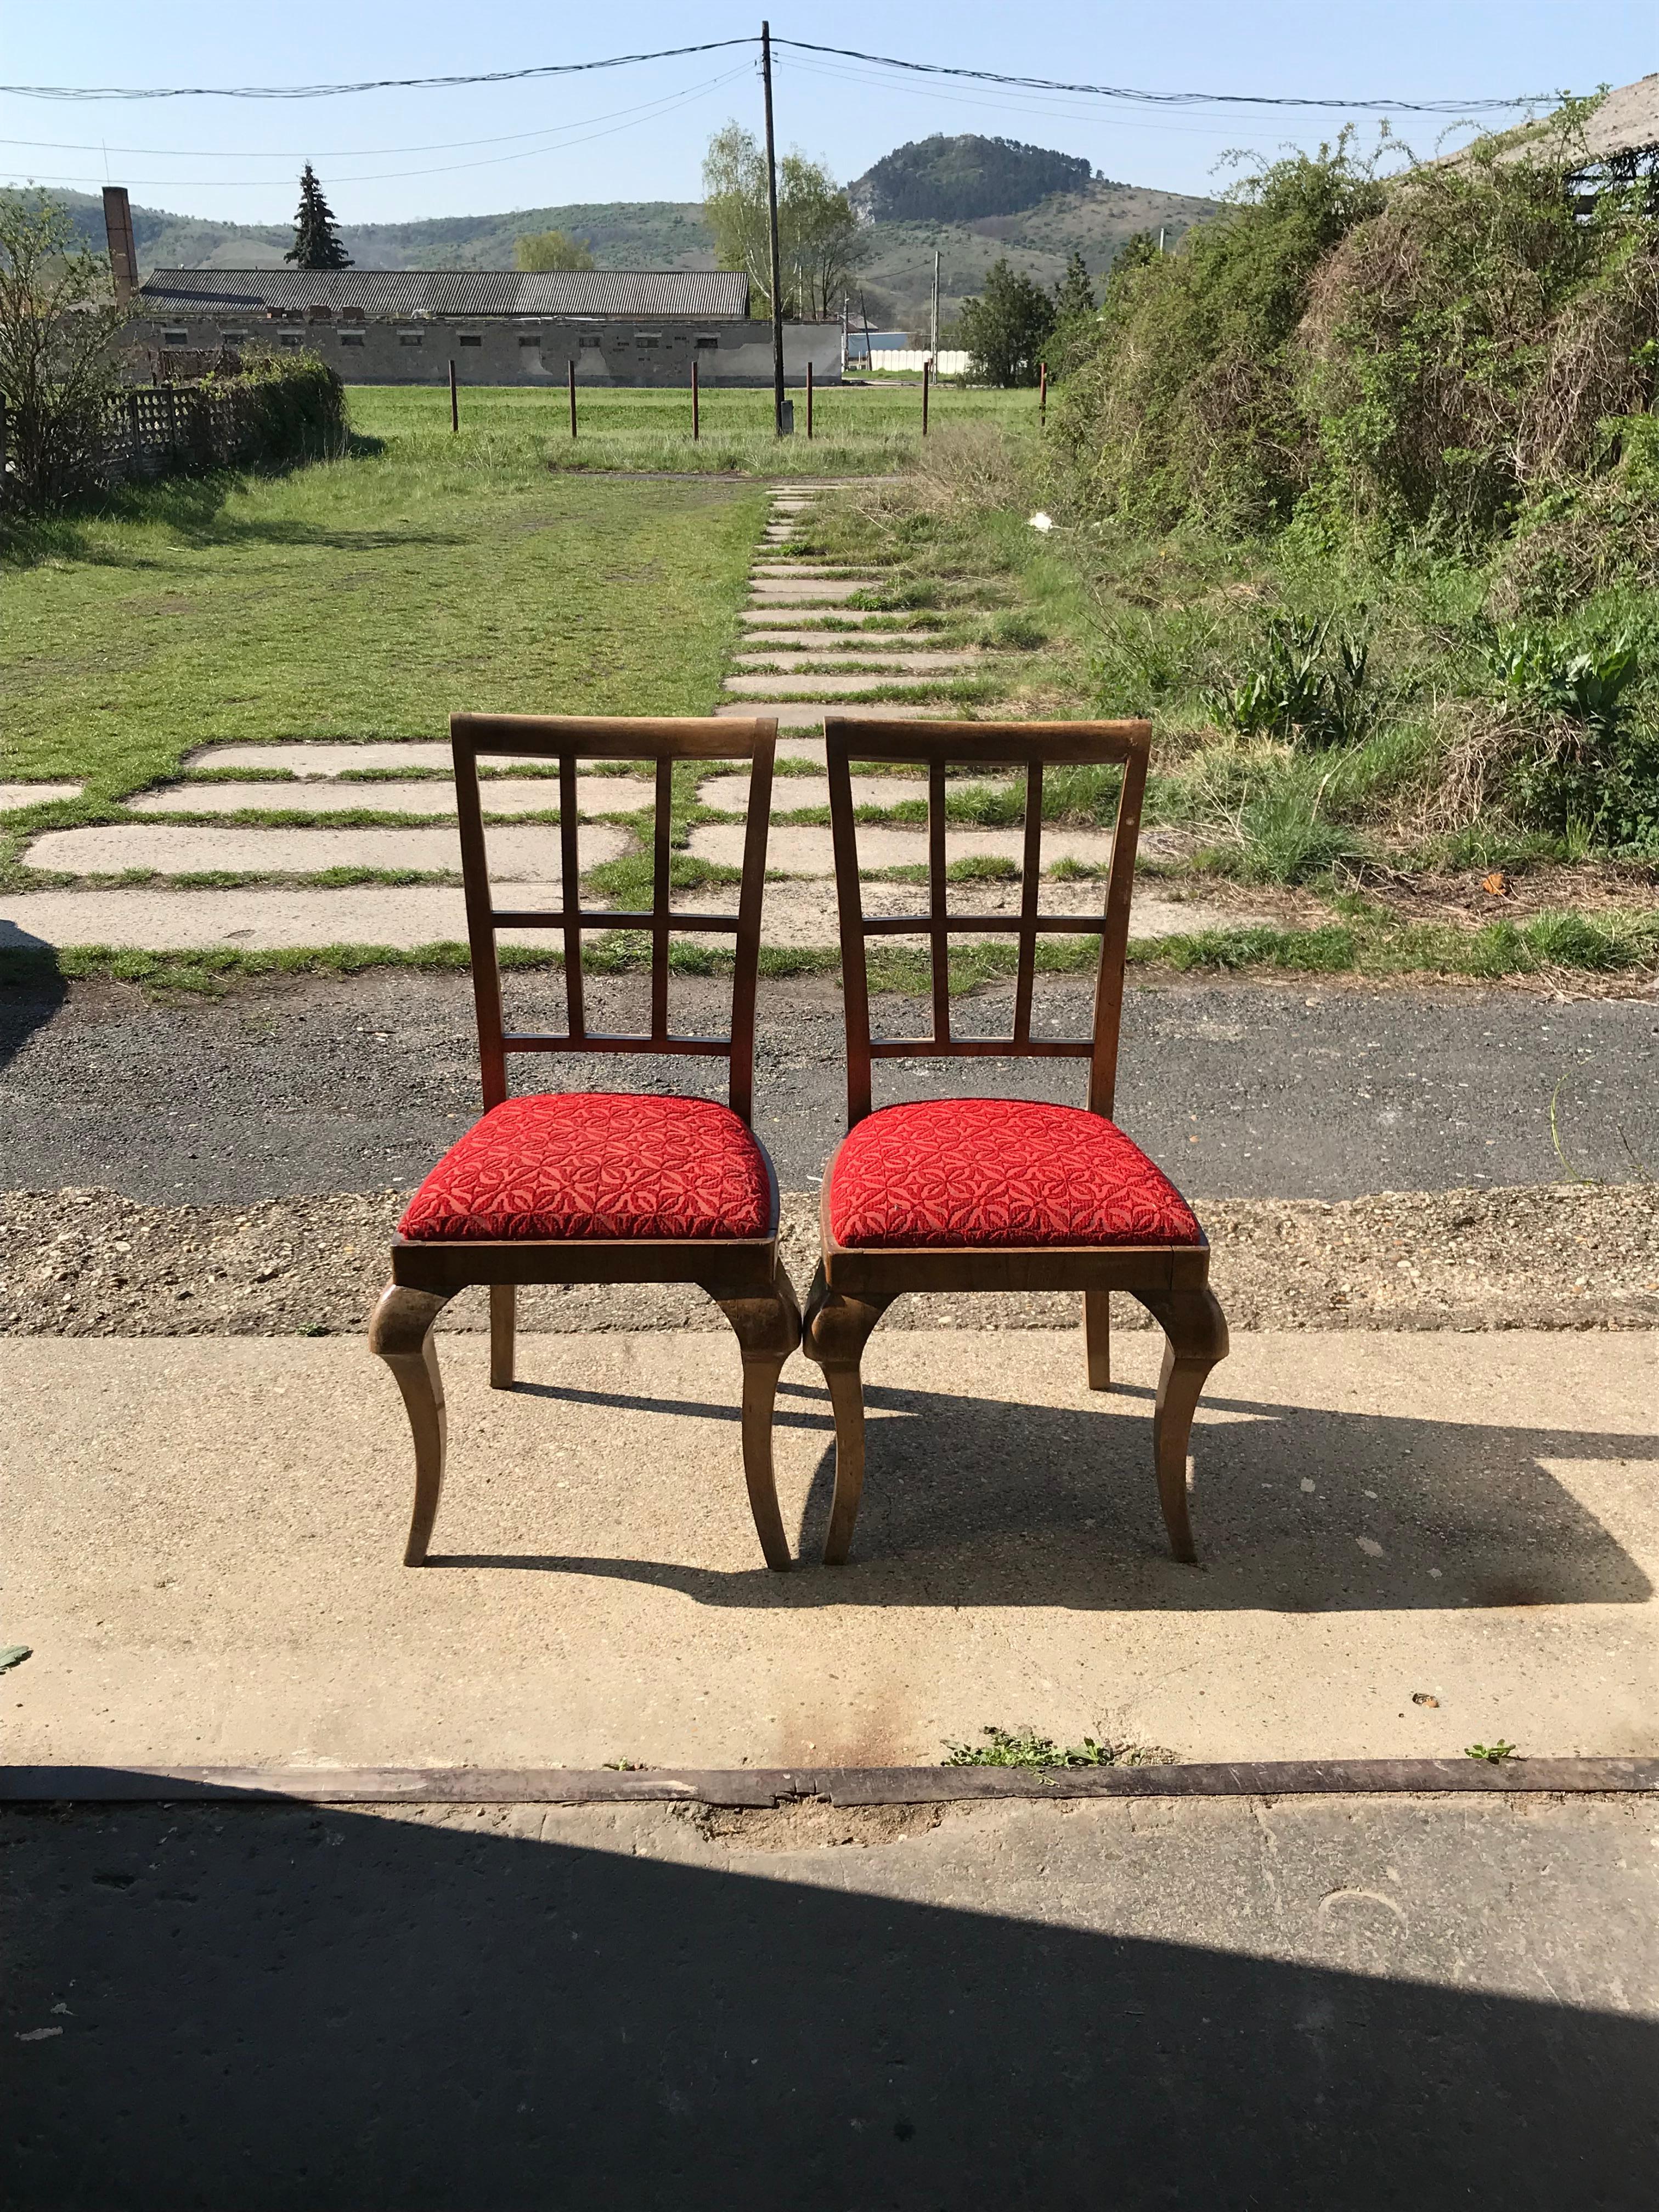 Pair of Art Deco original chairs.
Original good condition.
Size: 51 x 48 x 97 H.